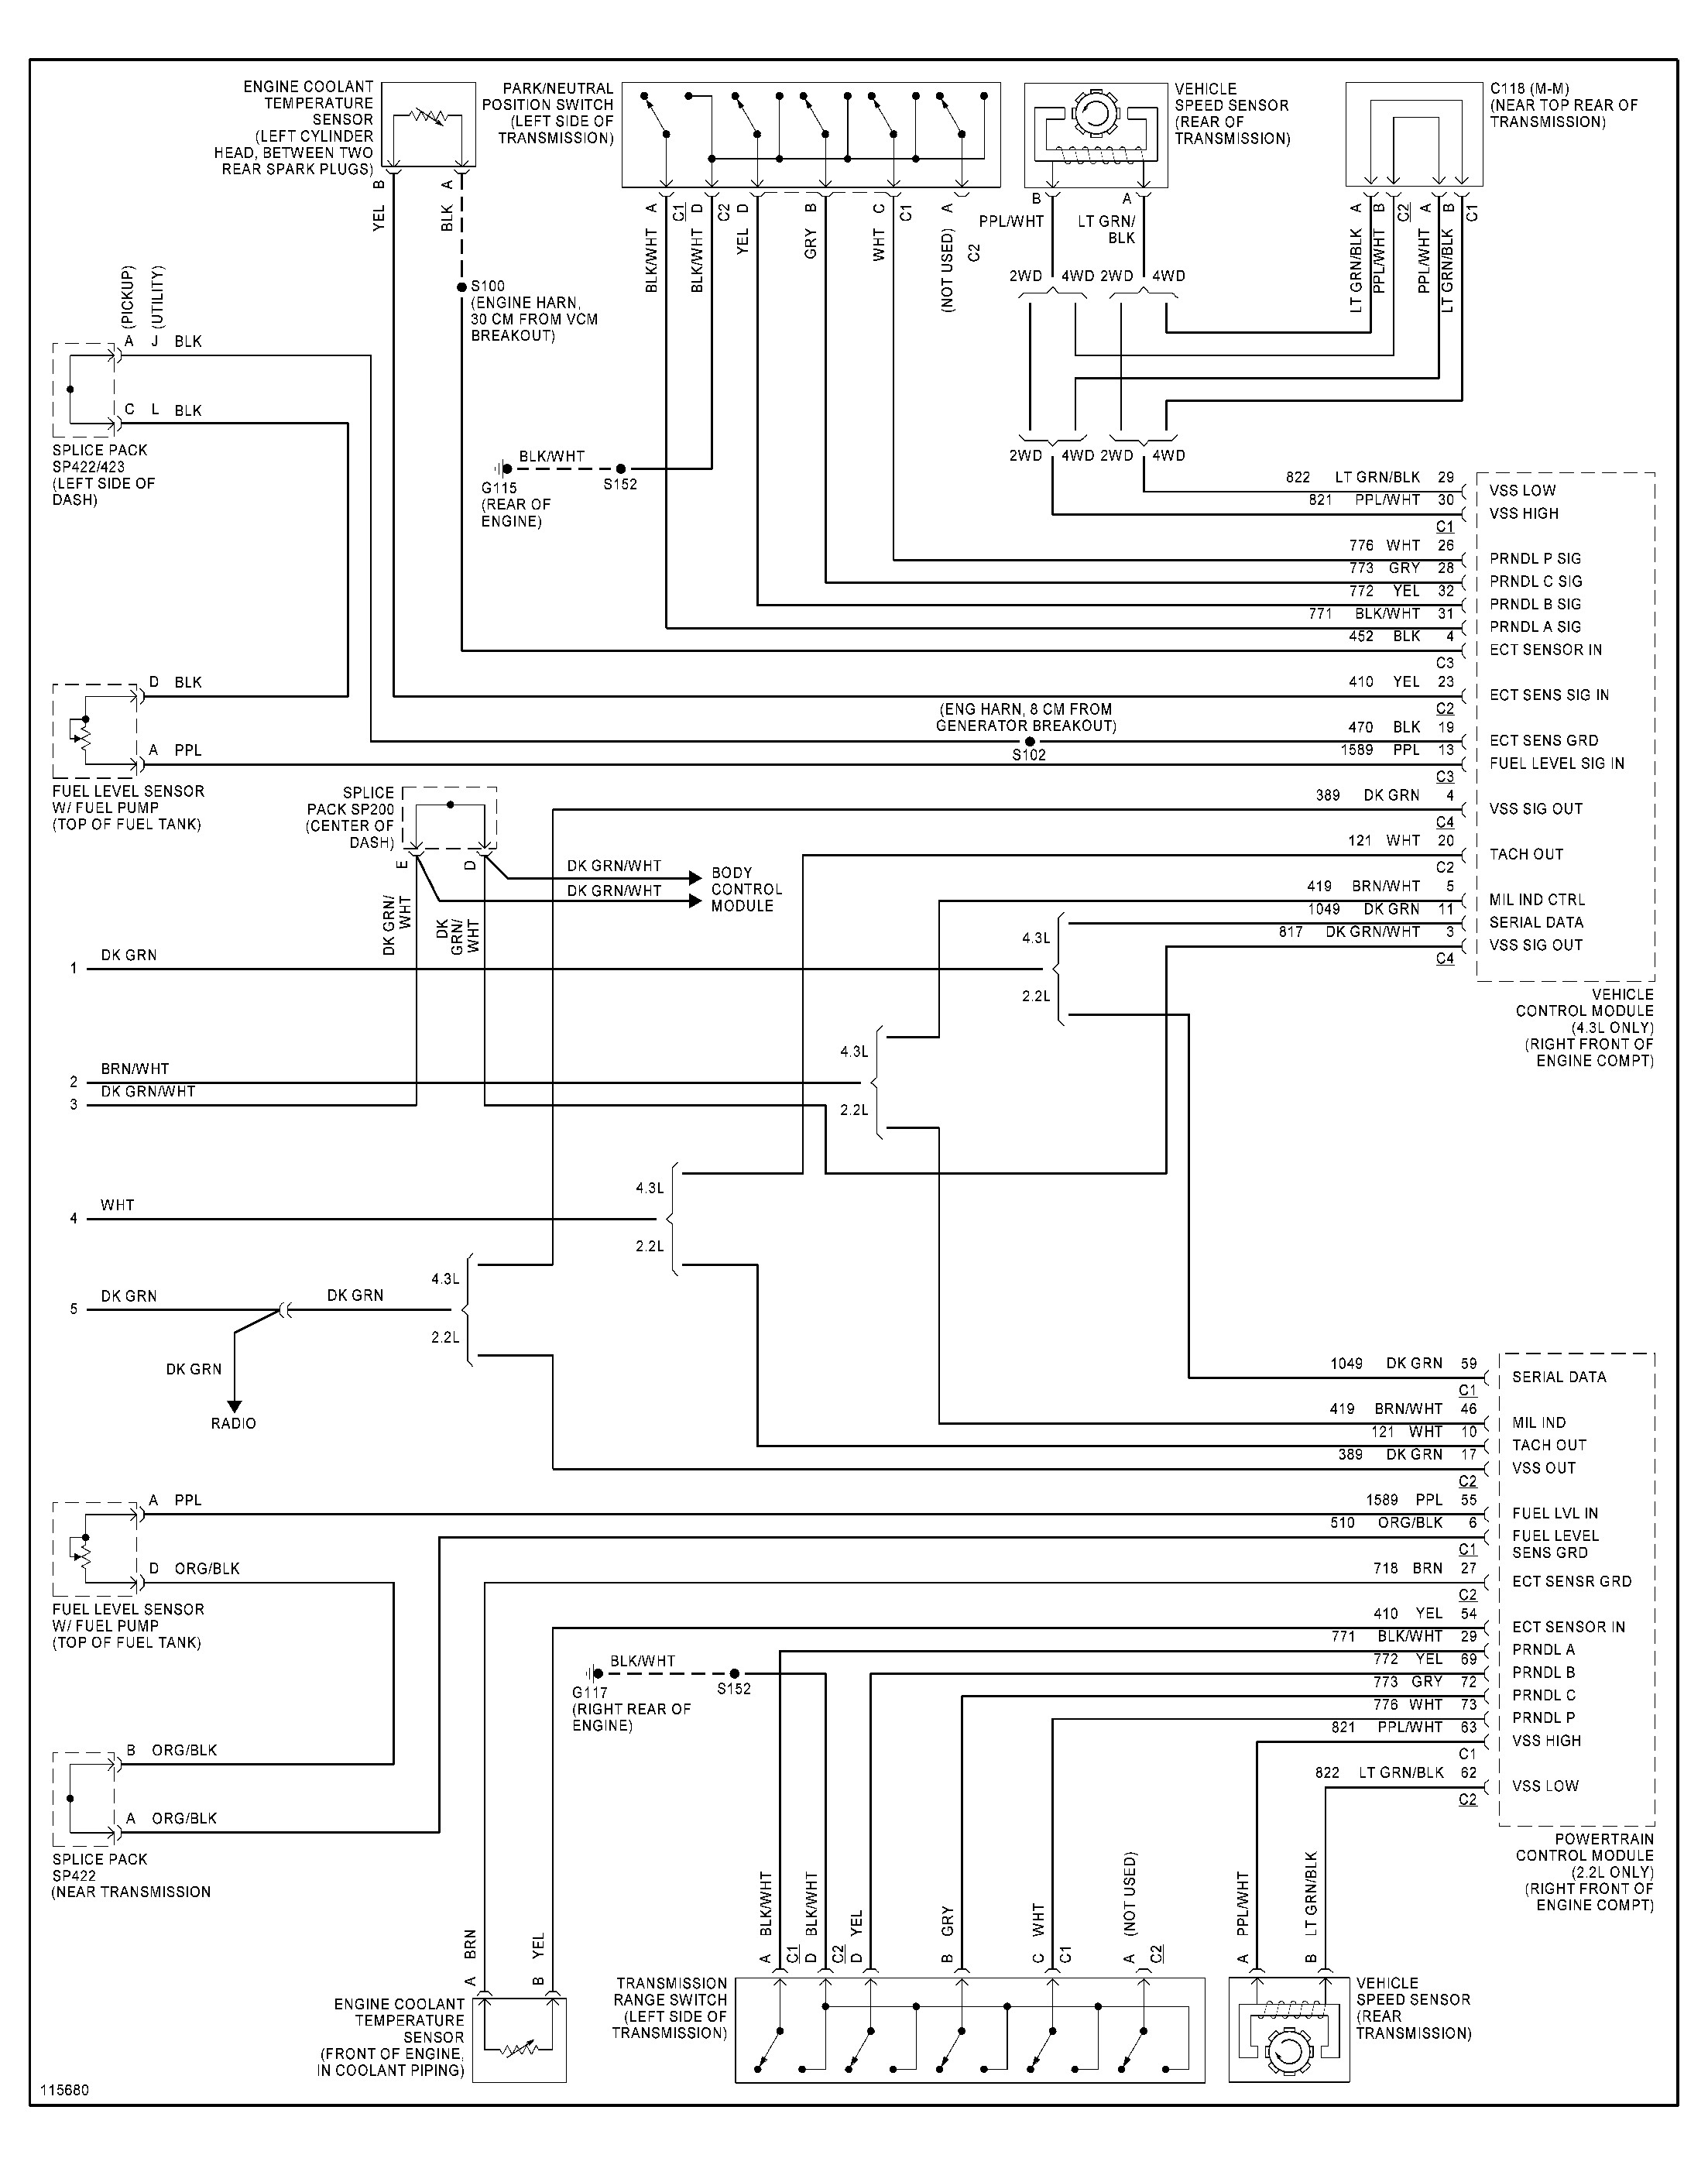 2000 Chevy Blazer Engine Diagram Wiring Diagram Tachometer Wiring Diagram 1999 Chevy Blazer Of 2000 Chevy Blazer Engine Diagram